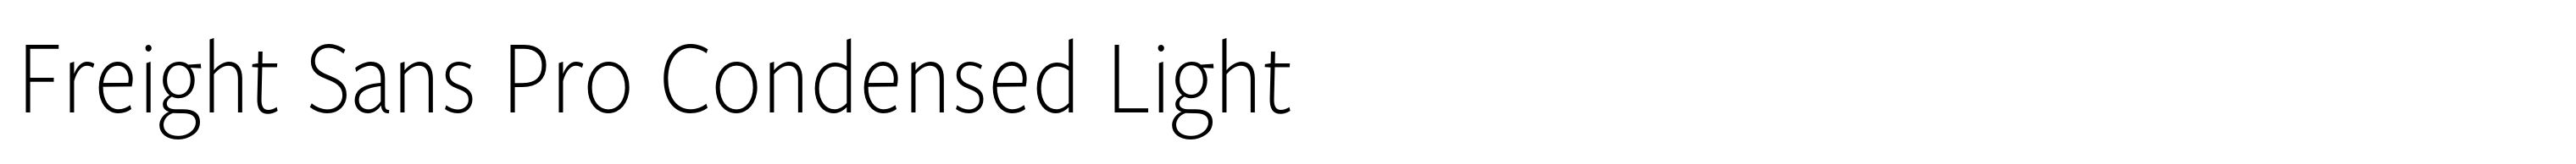 Freight Sans Pro Condensed Light